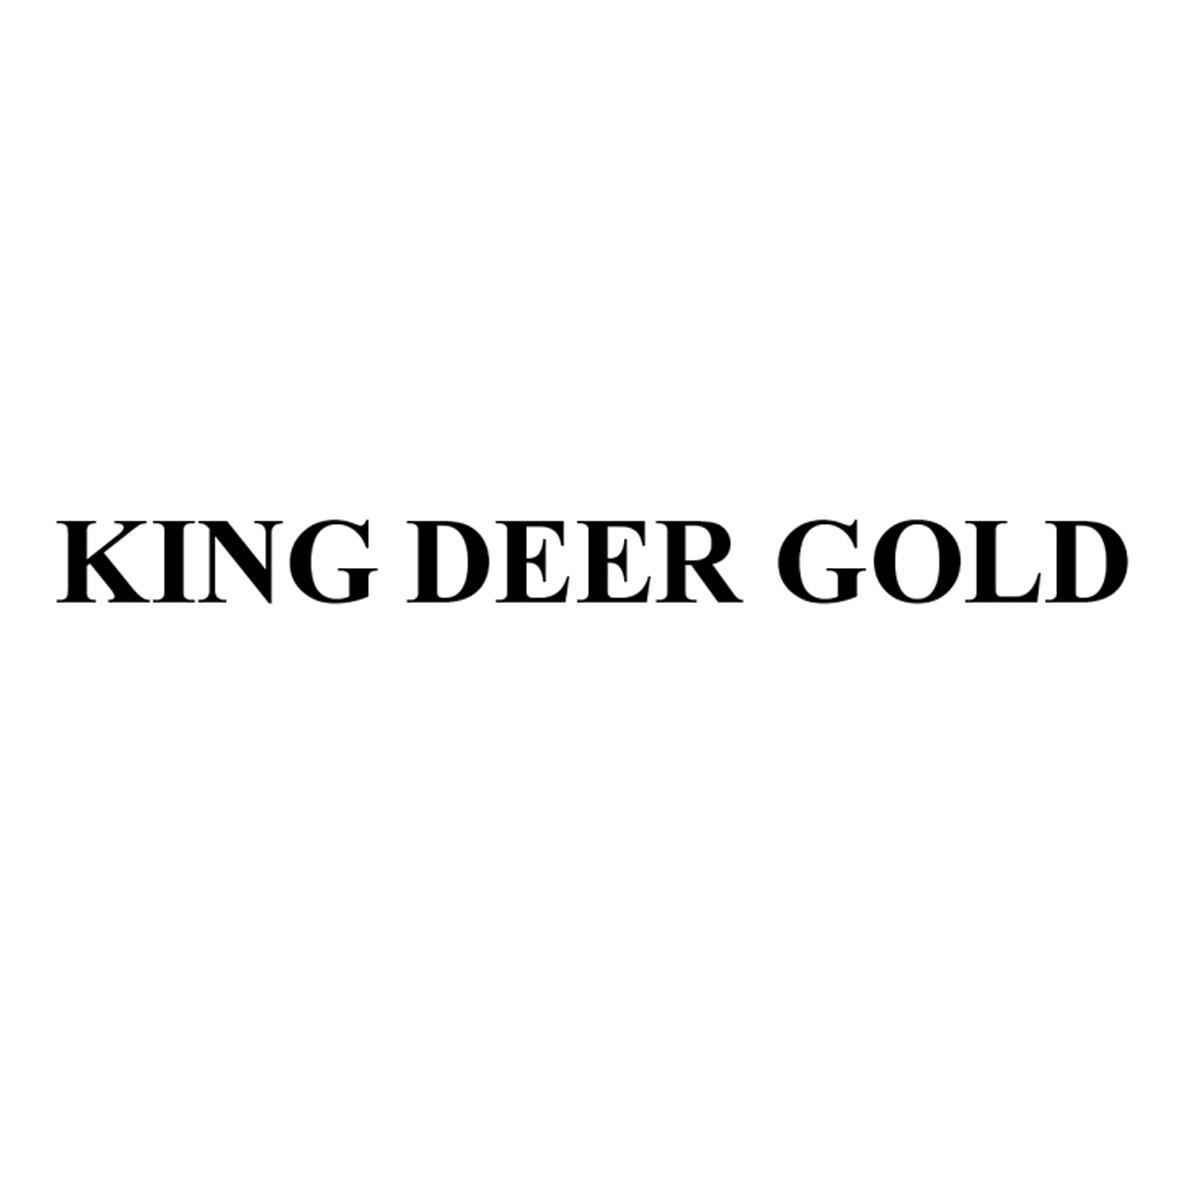 KING DEER GOLD